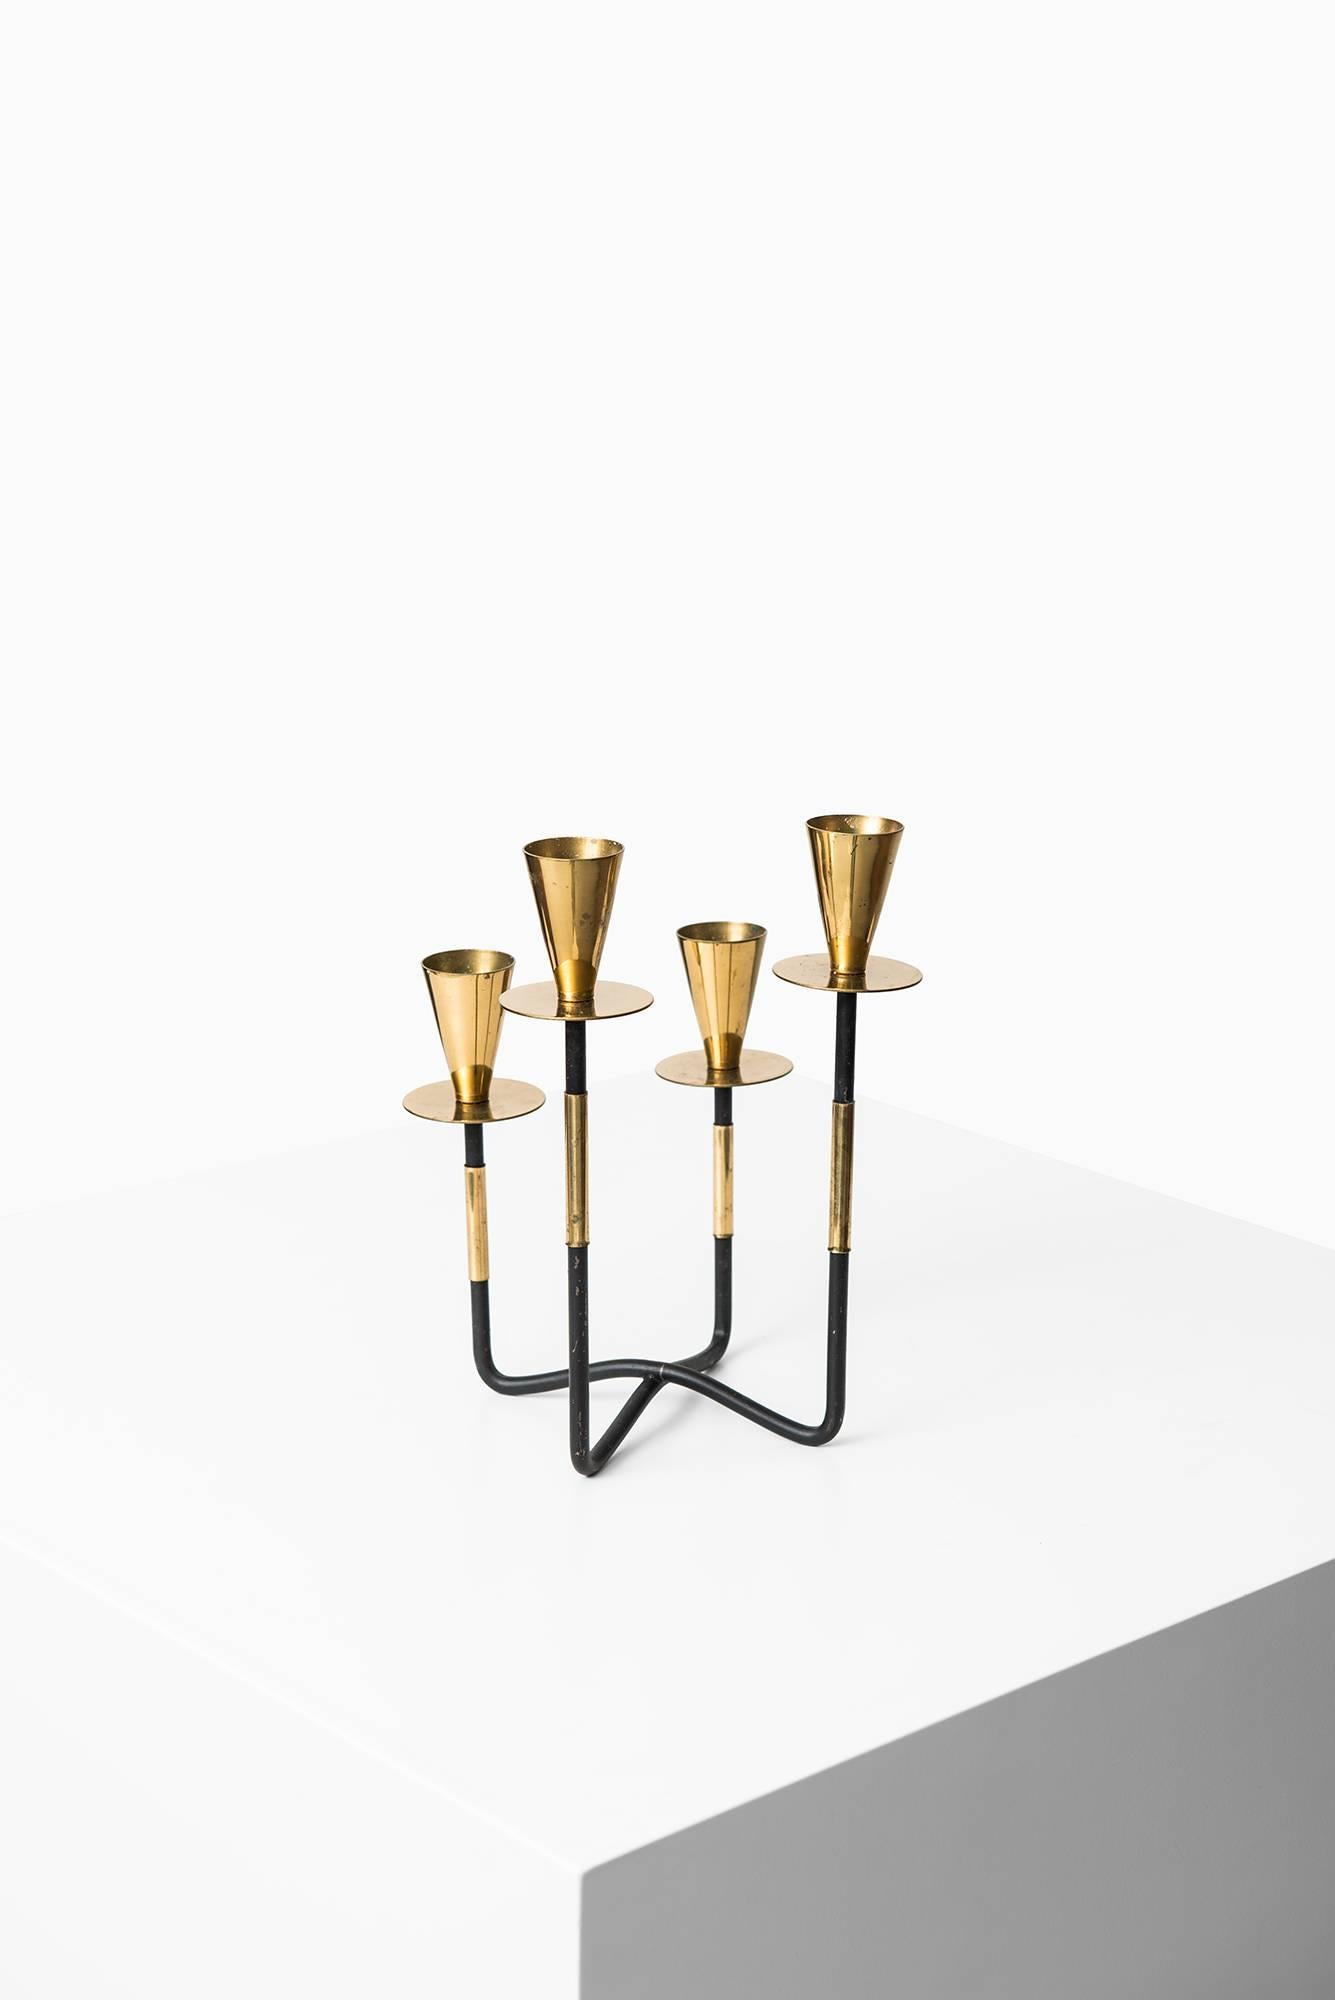 Scandinavian Modern Candlestick in Brass by Nils Johan in Sweden